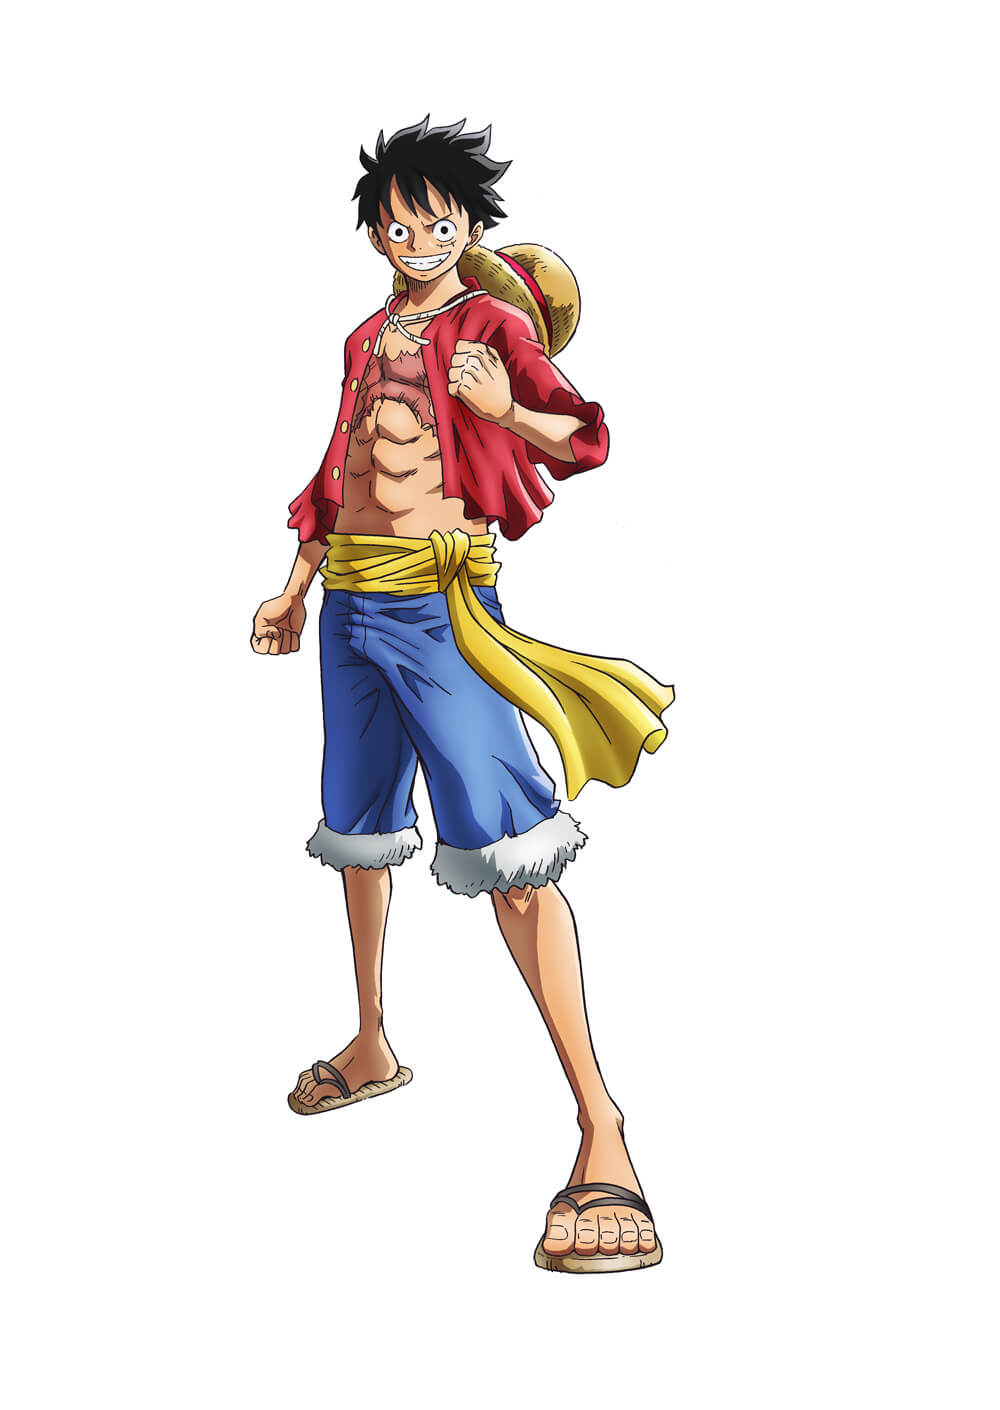 V6新歌 Super Powers 決定成為動畫 One Piece航海王 最新主題歌 Moshi Moshi Nippon もしもしにっぽん